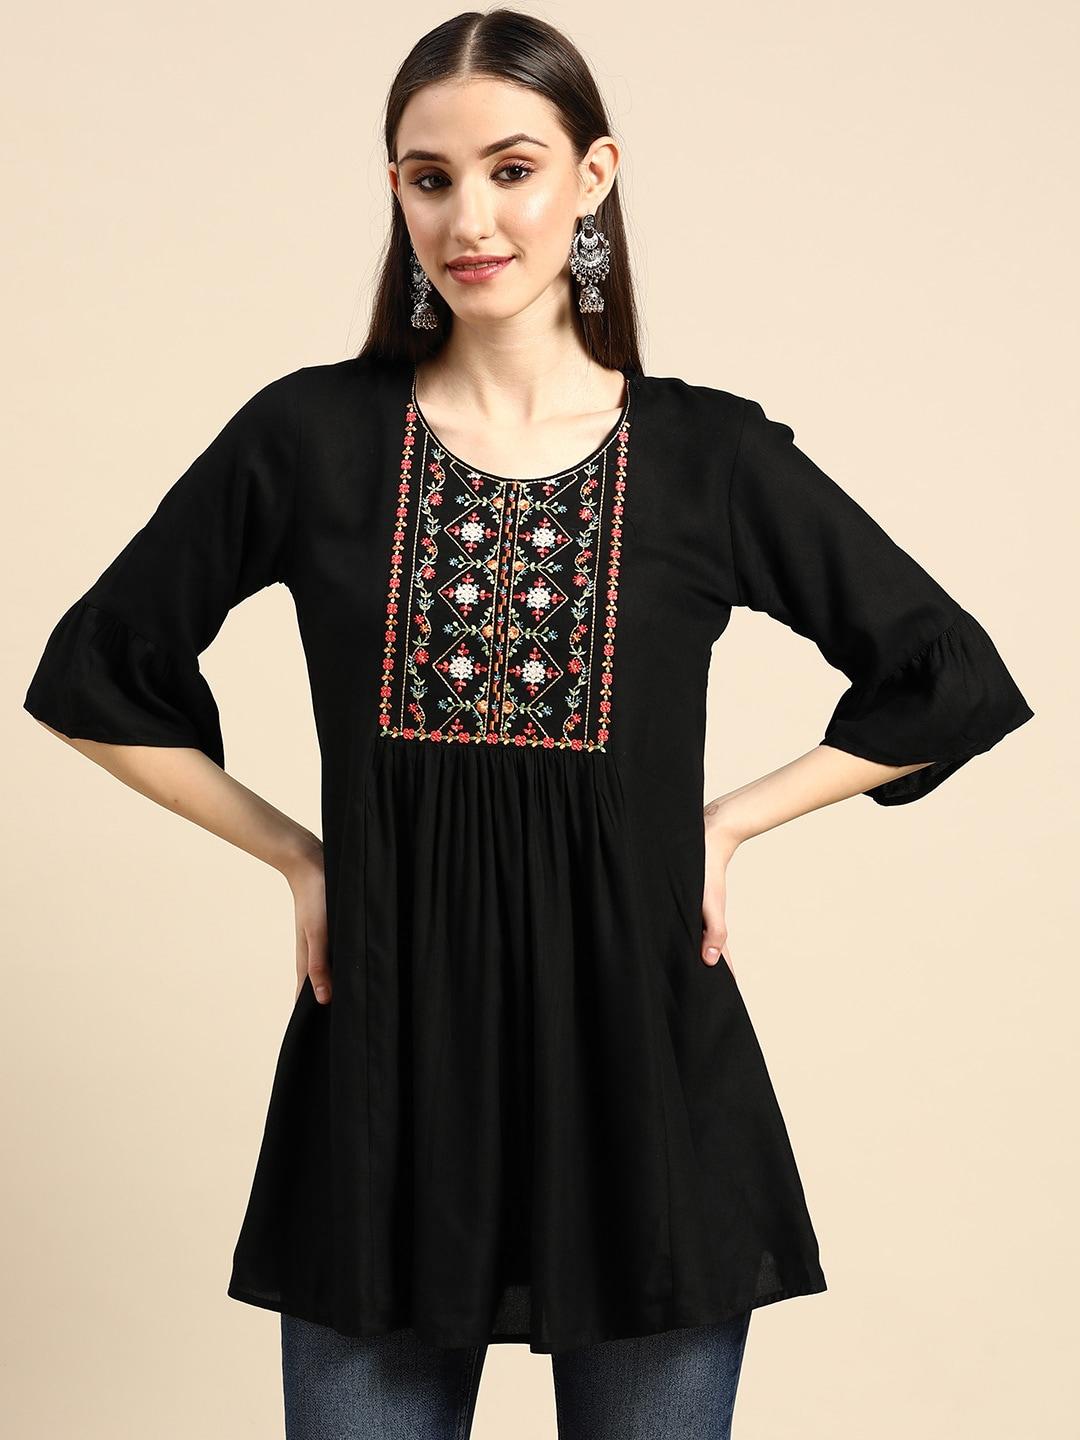 sangria-black-floral-embroidered-top